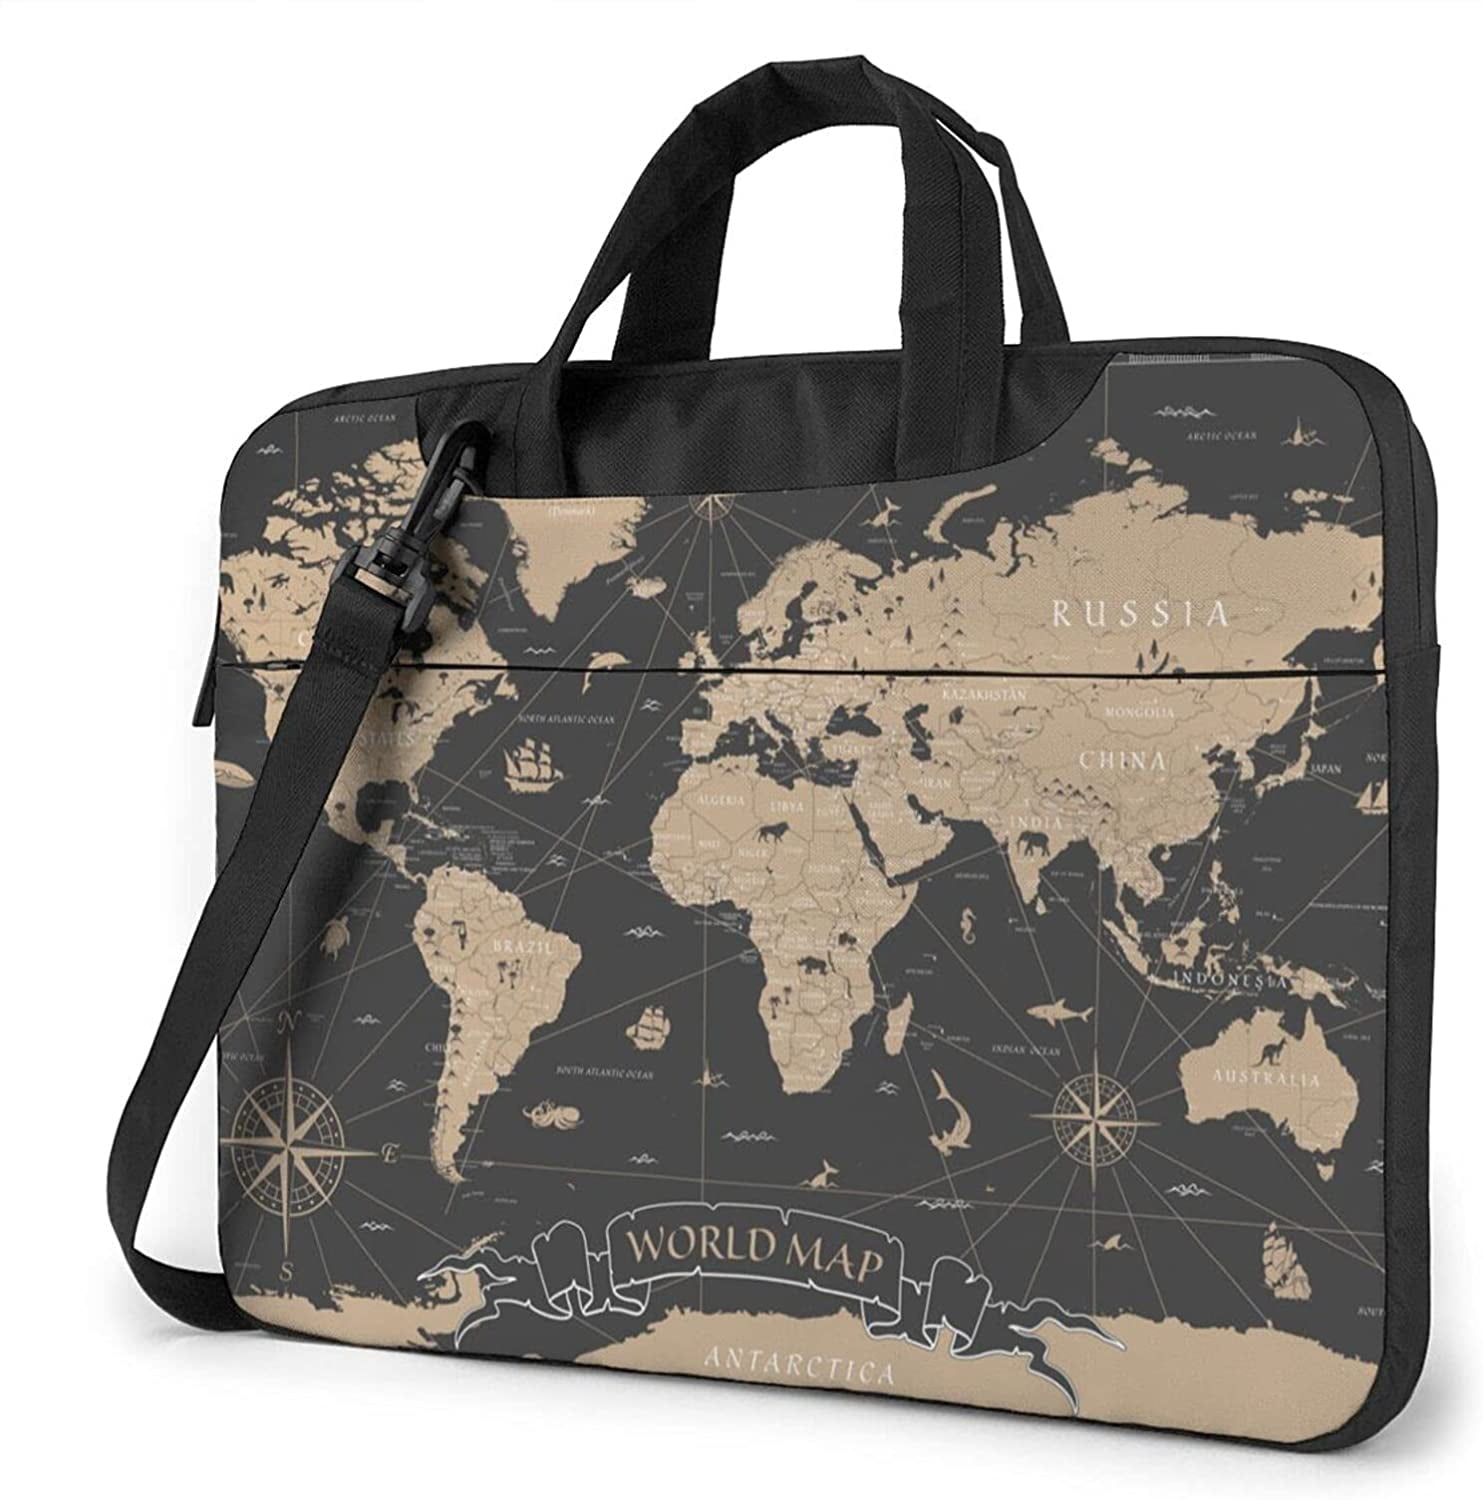 World Map Laptop Shoulder Messenger Bag Case Sleeve For The Business Professional Travel Commuter Fits Up To 14-Inch Laptops